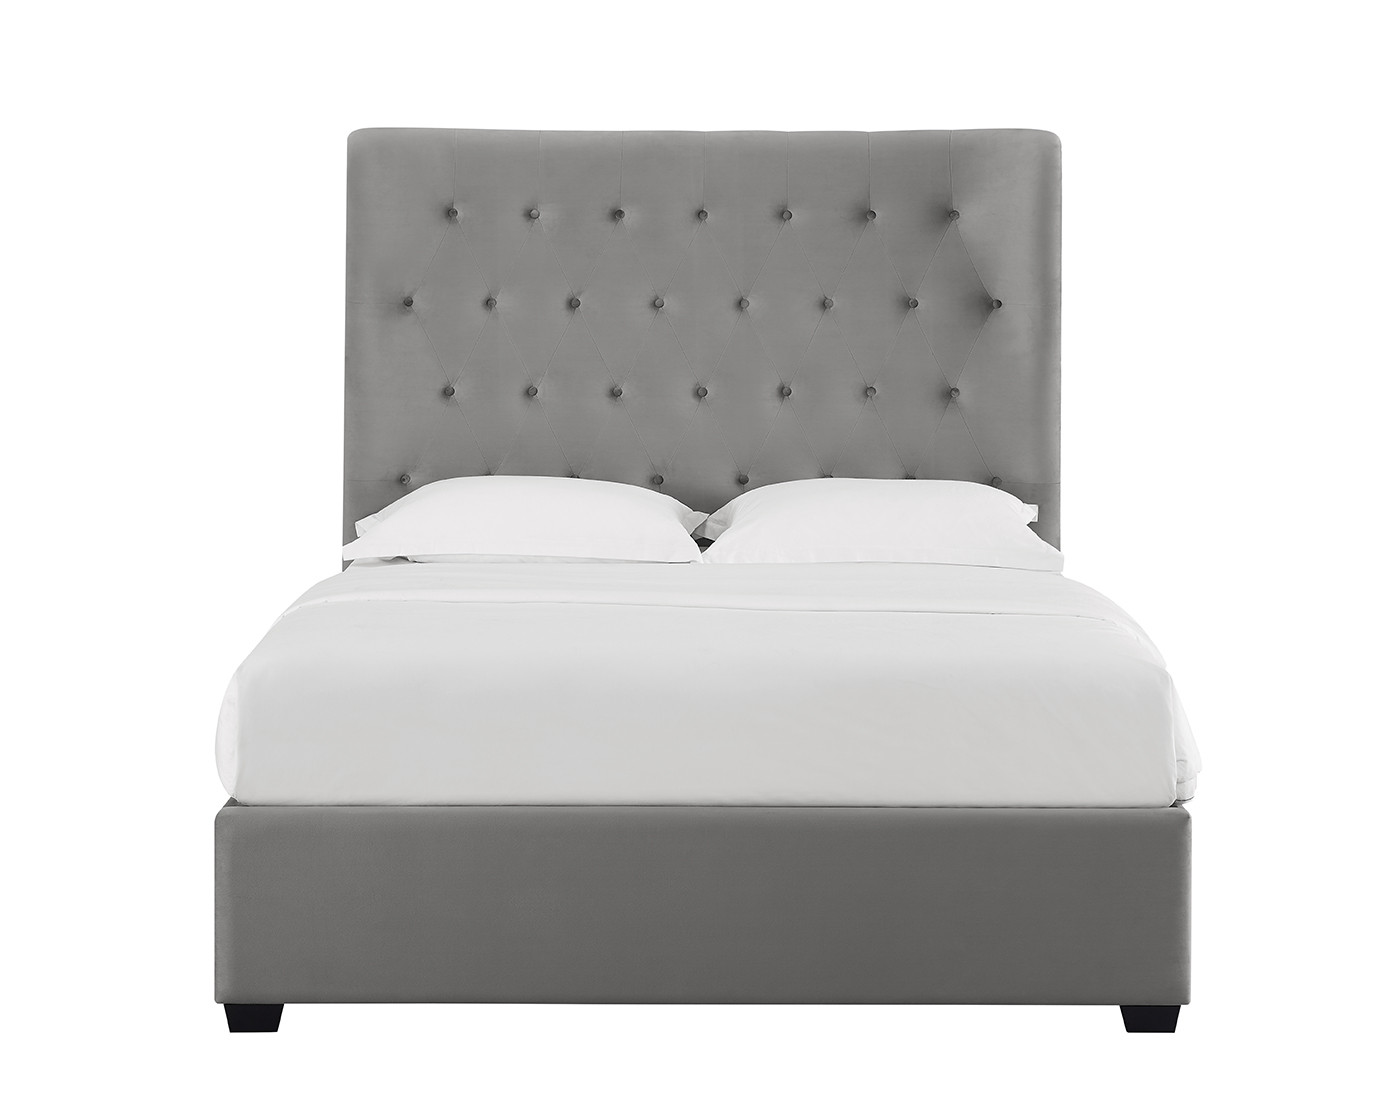 belgravia style bedroom furniture